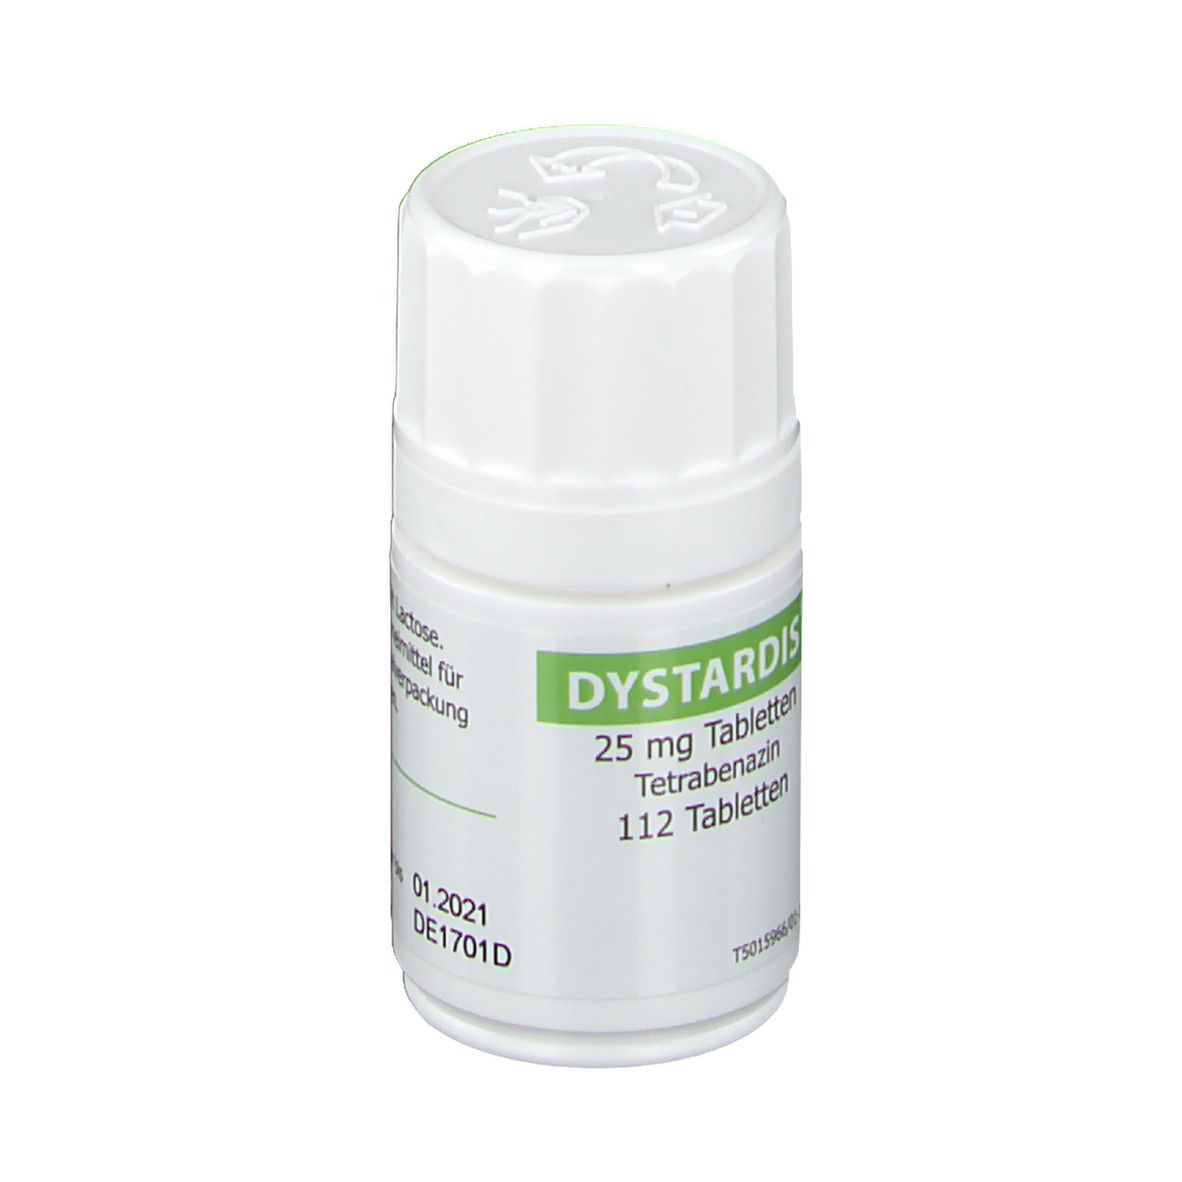 DYSTARDIS® 25 mg